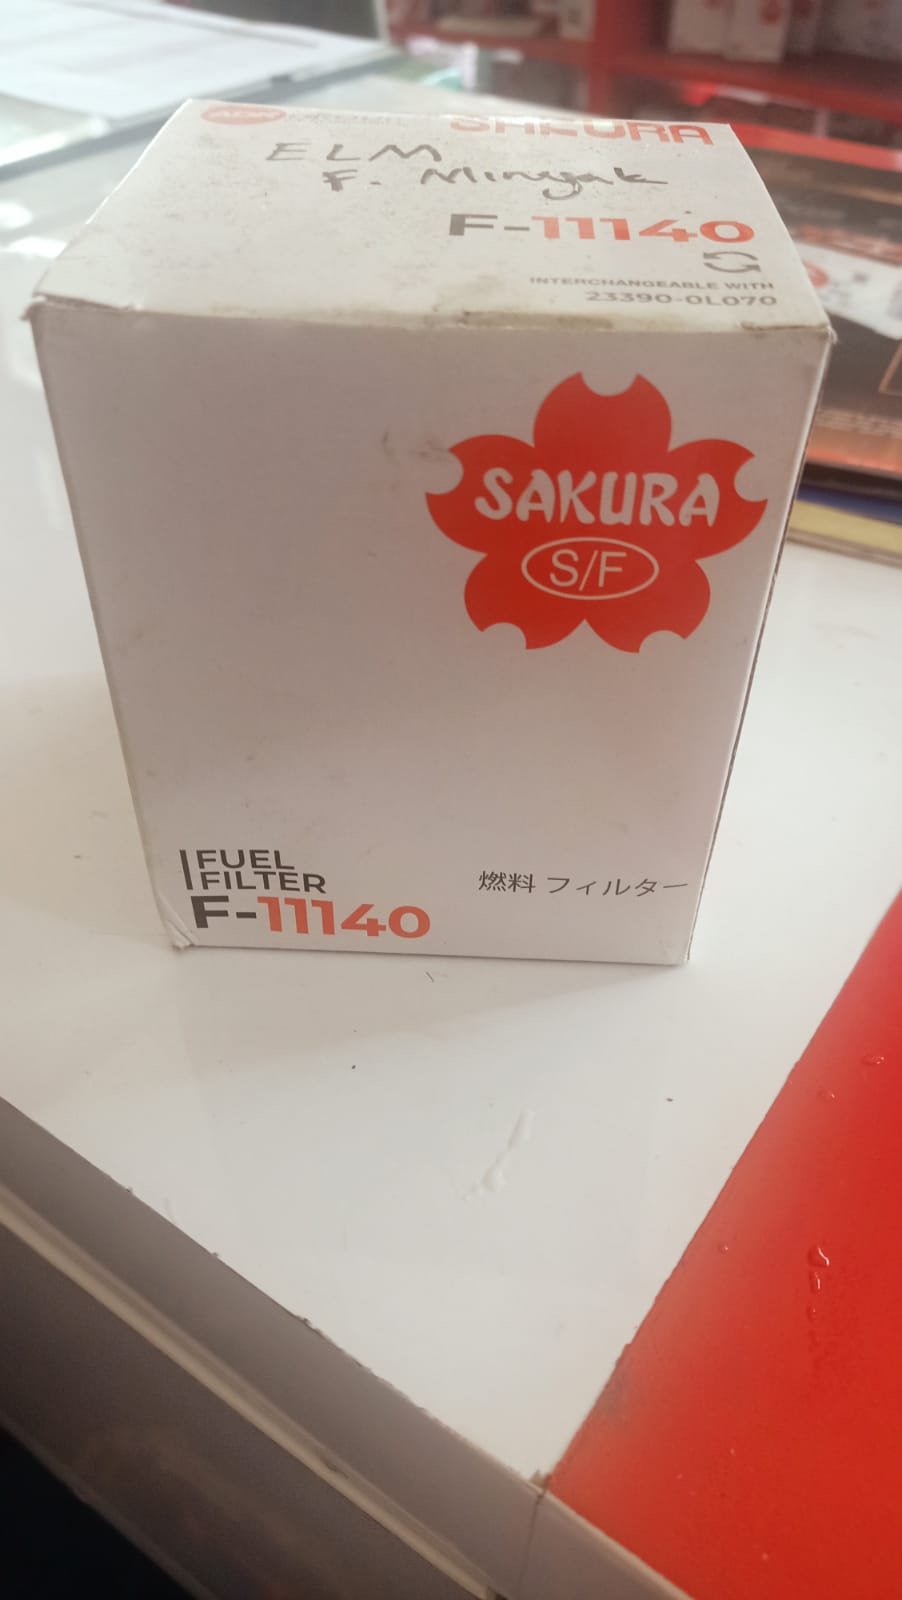 Filter Solar Toyota Hilux Sakura